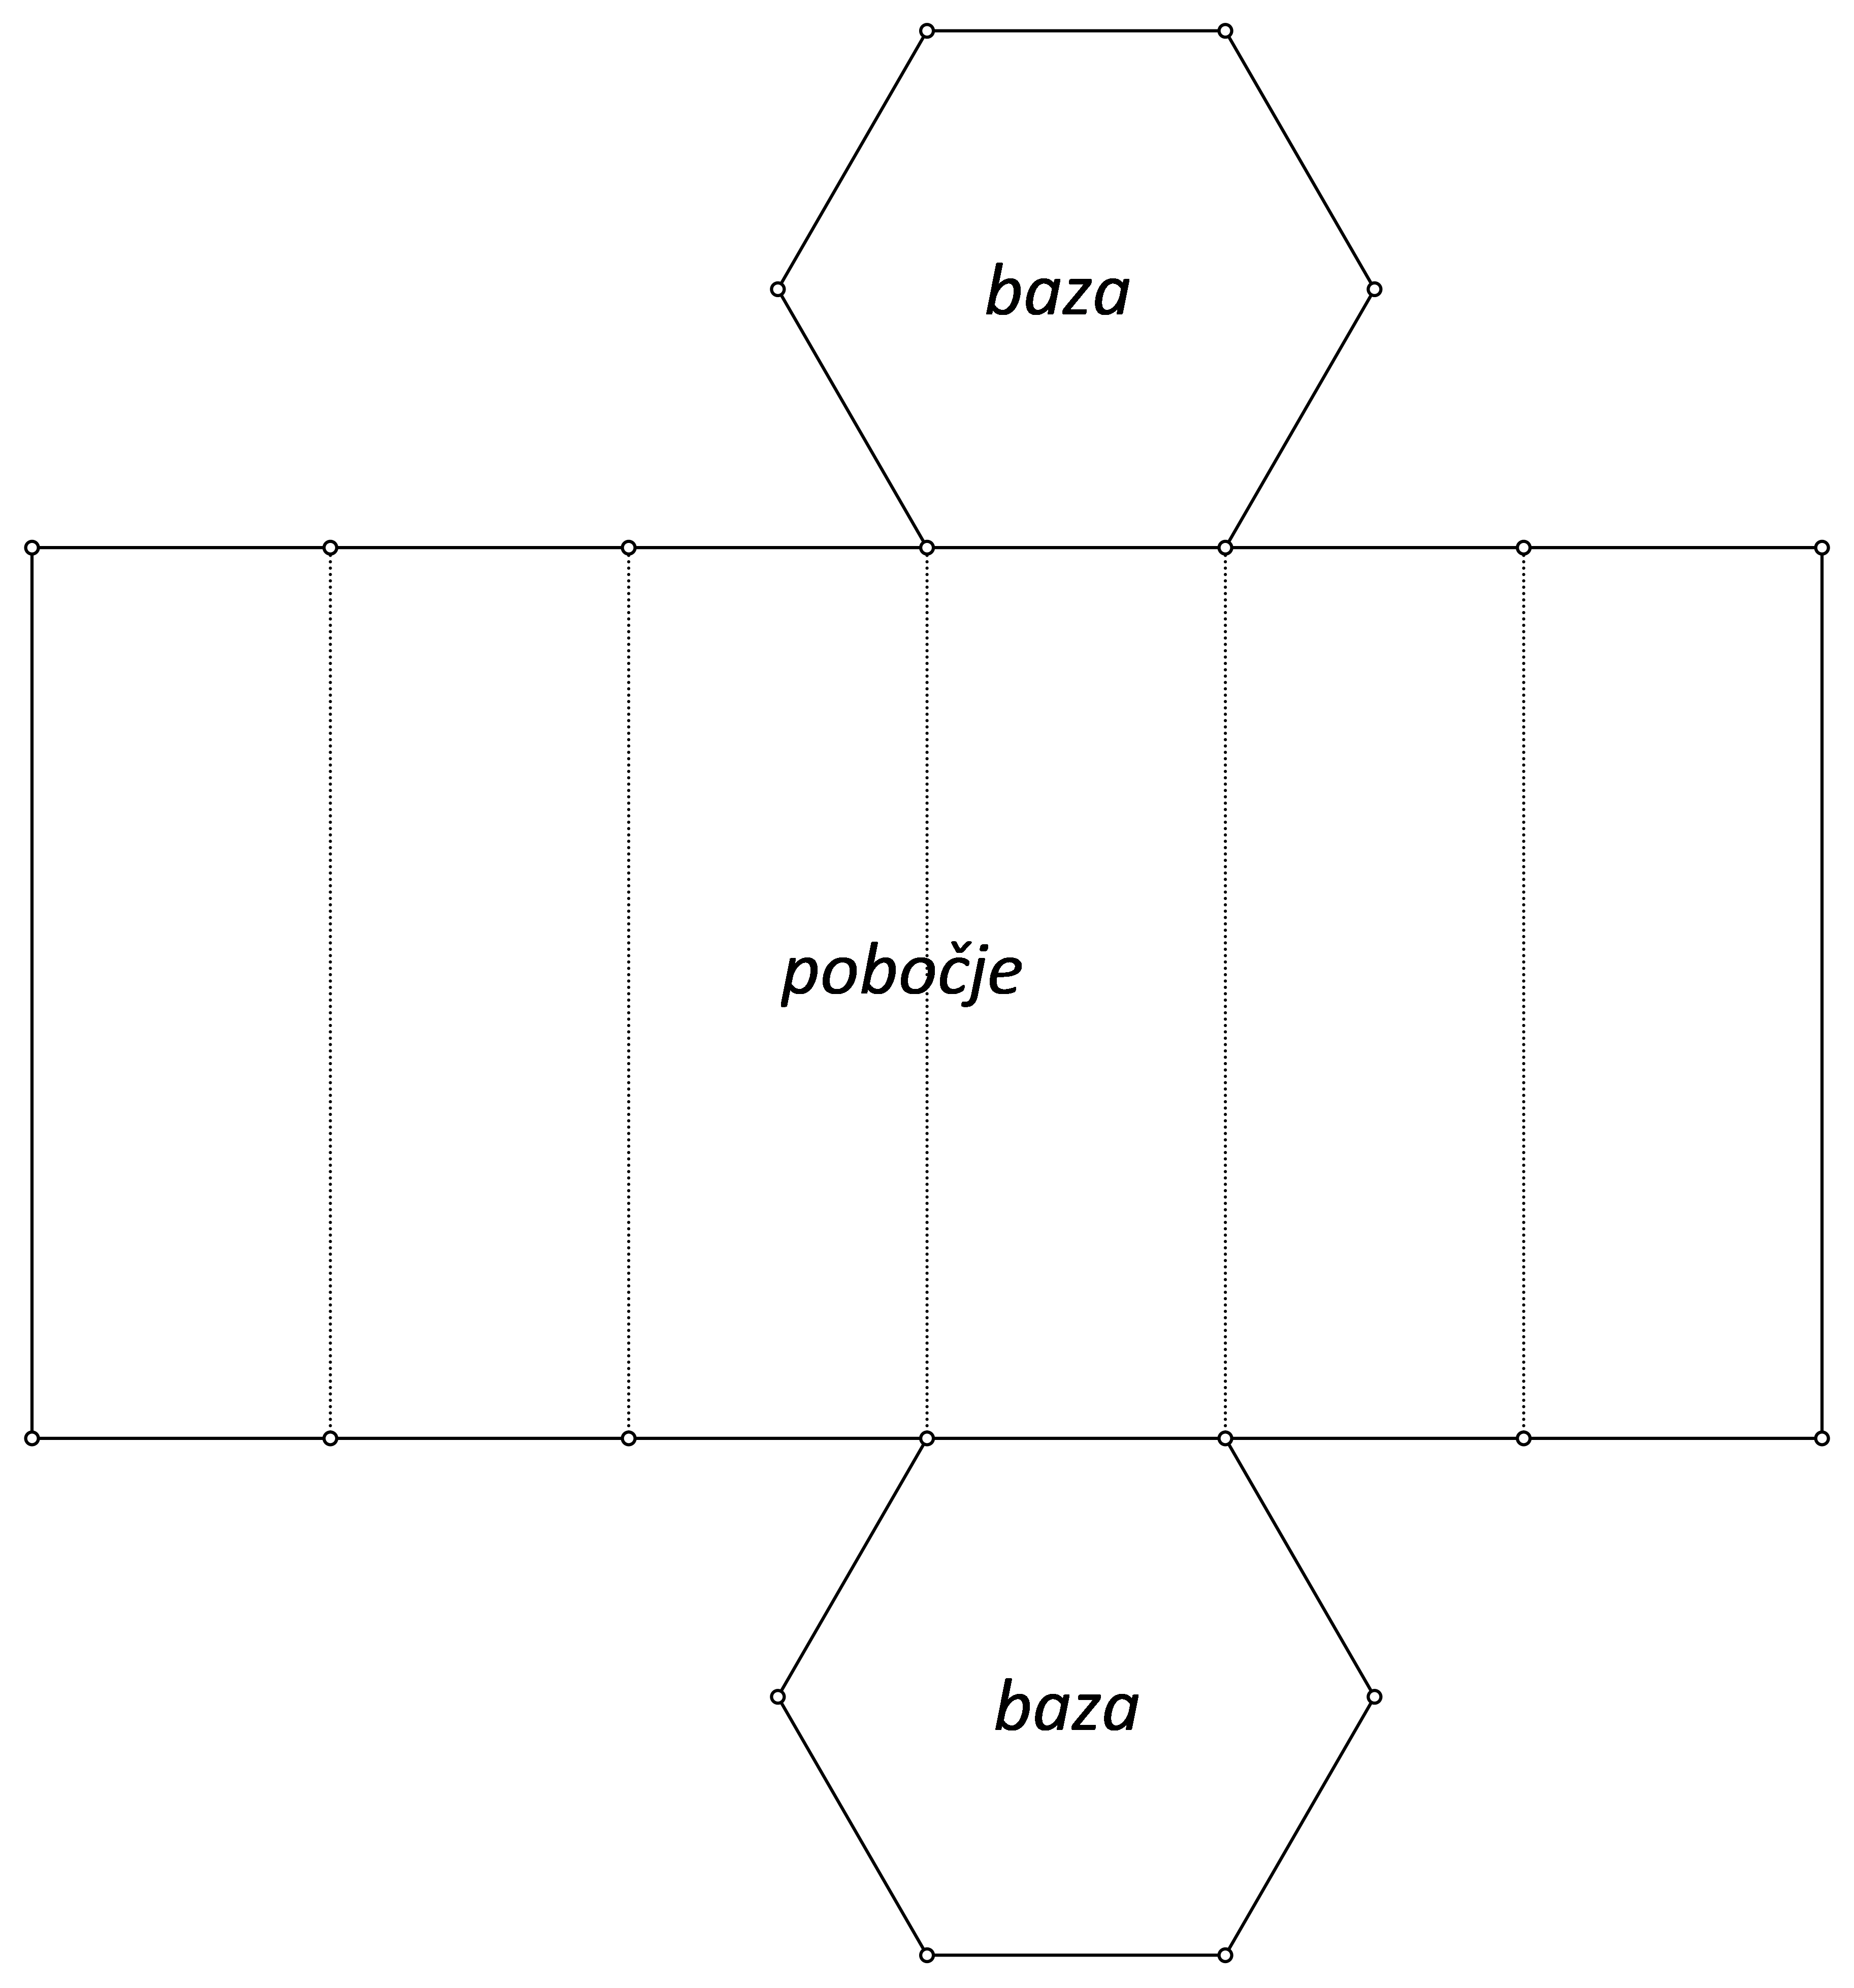 Slika prikazuje mrežu pravilne šesterostrane prizme s upisanim pojmovima baza i pobočje.